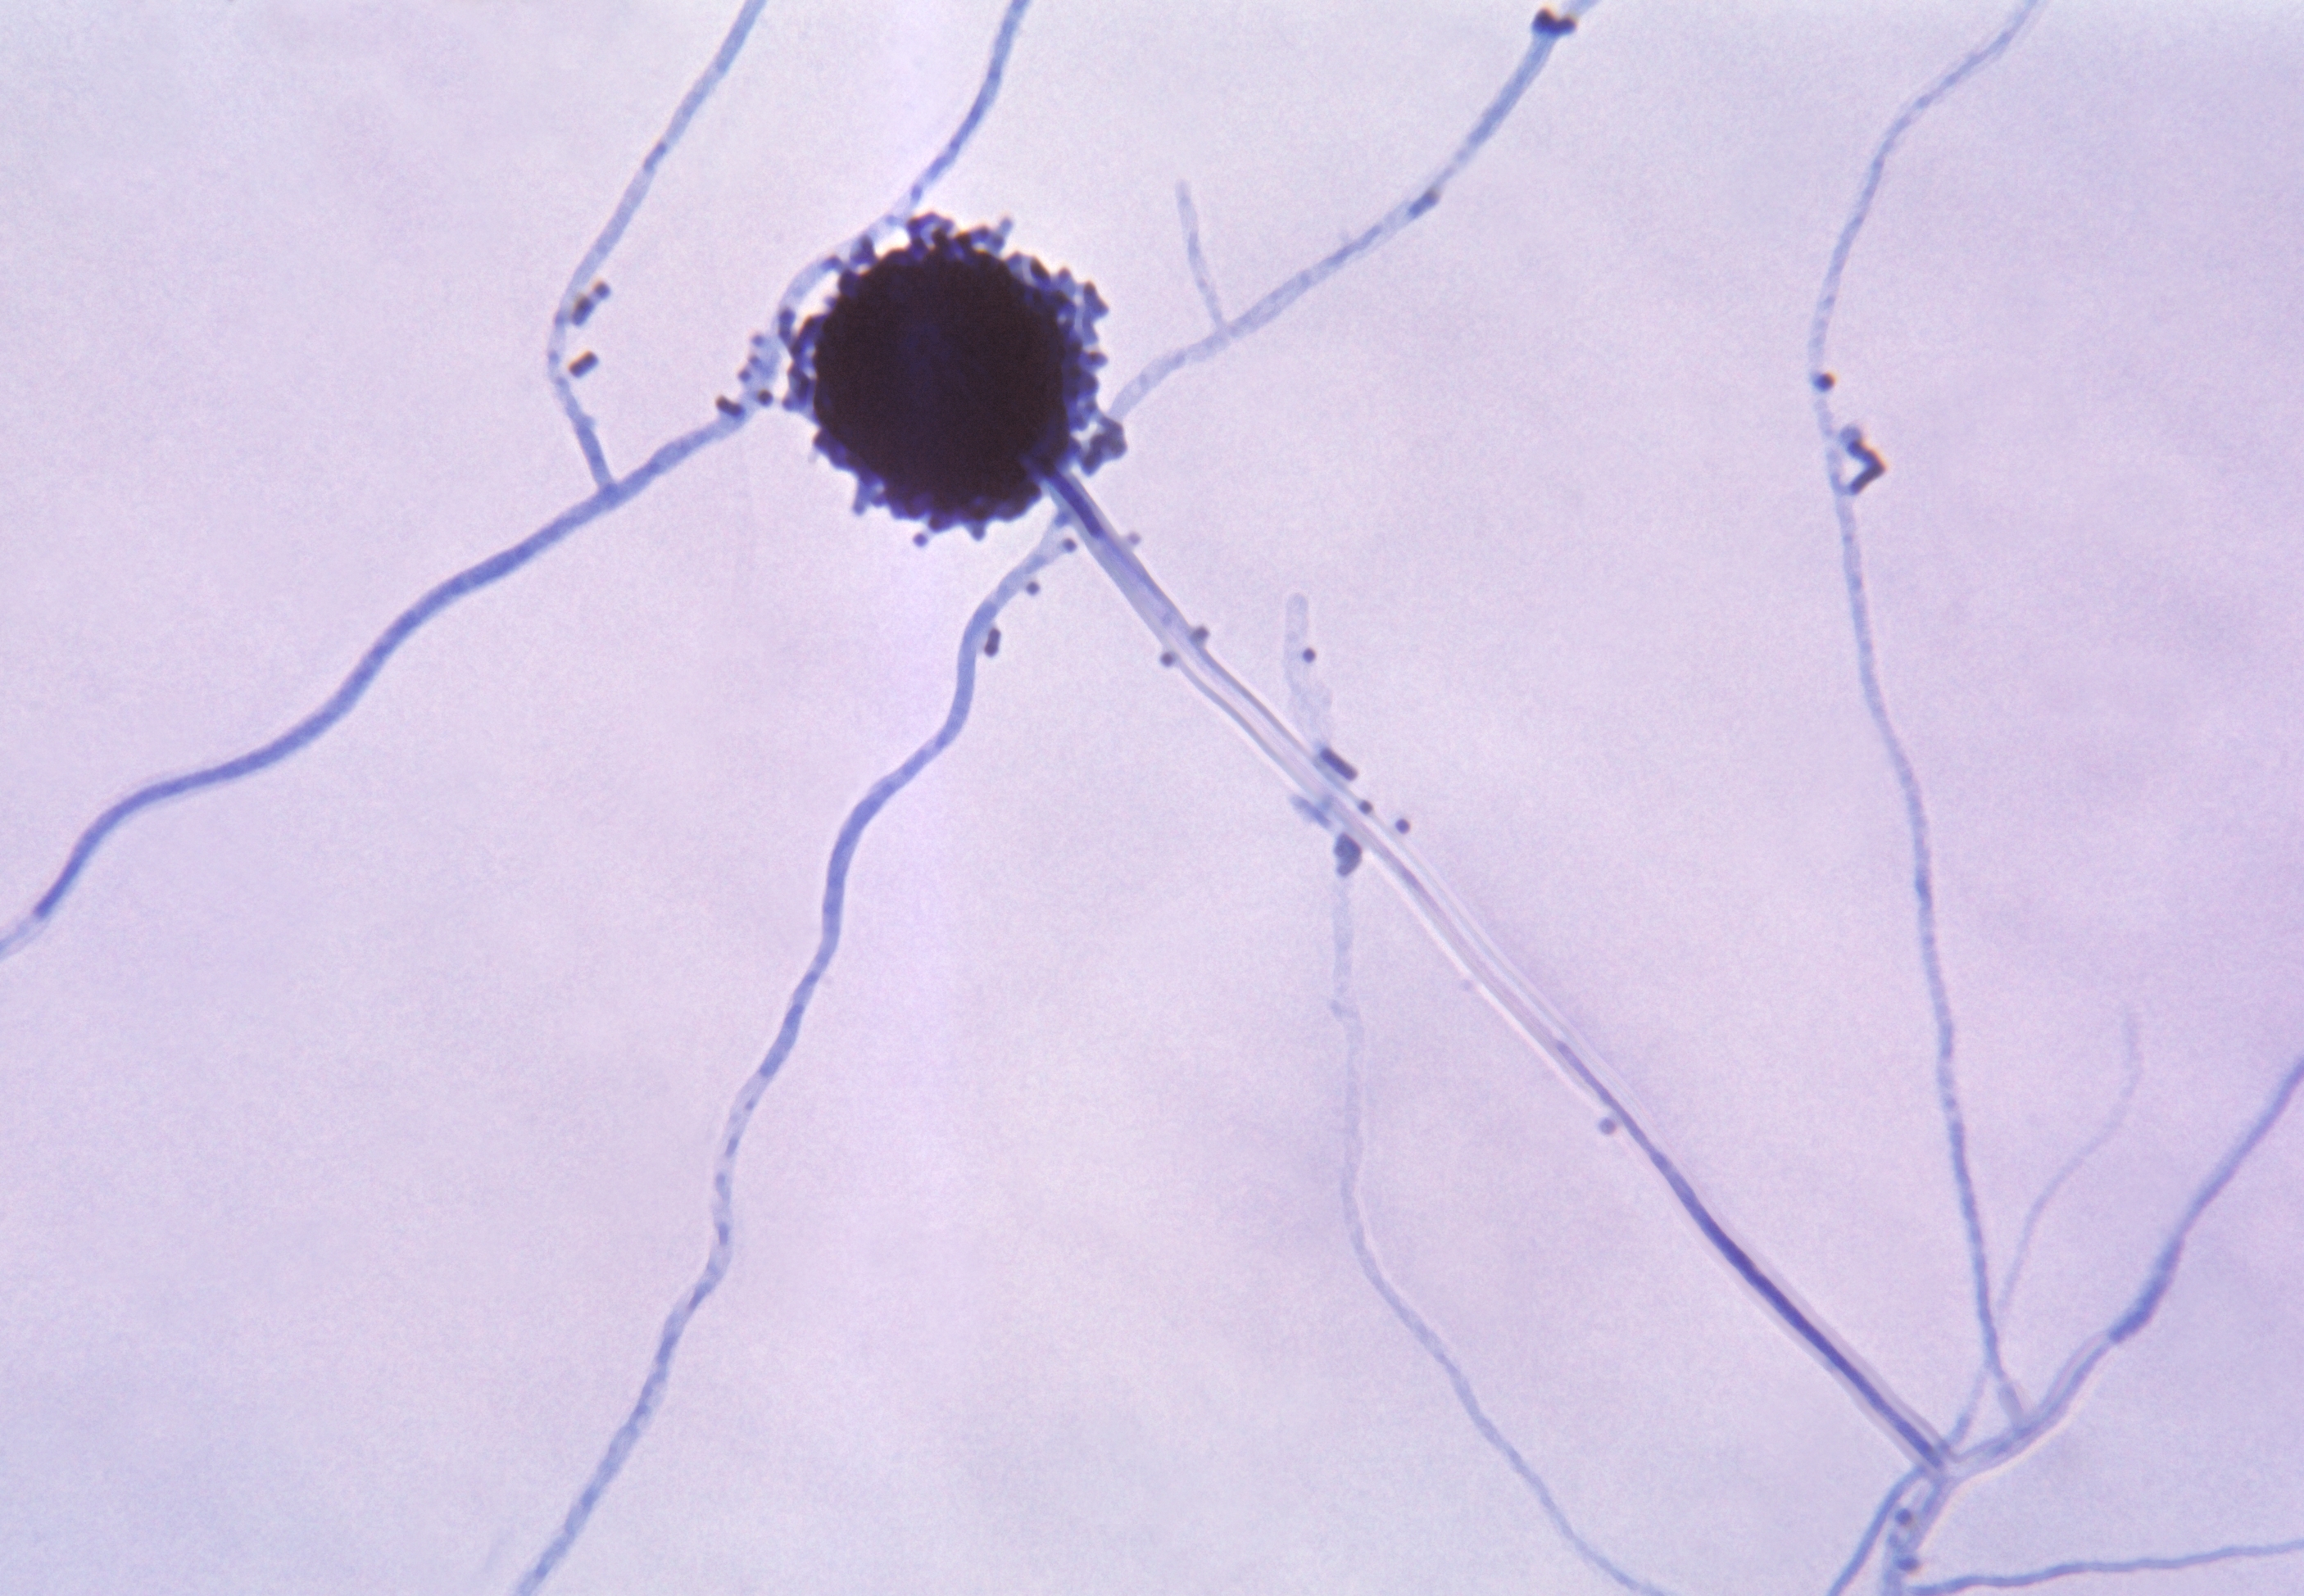 labelled aspergillus niger under microscope